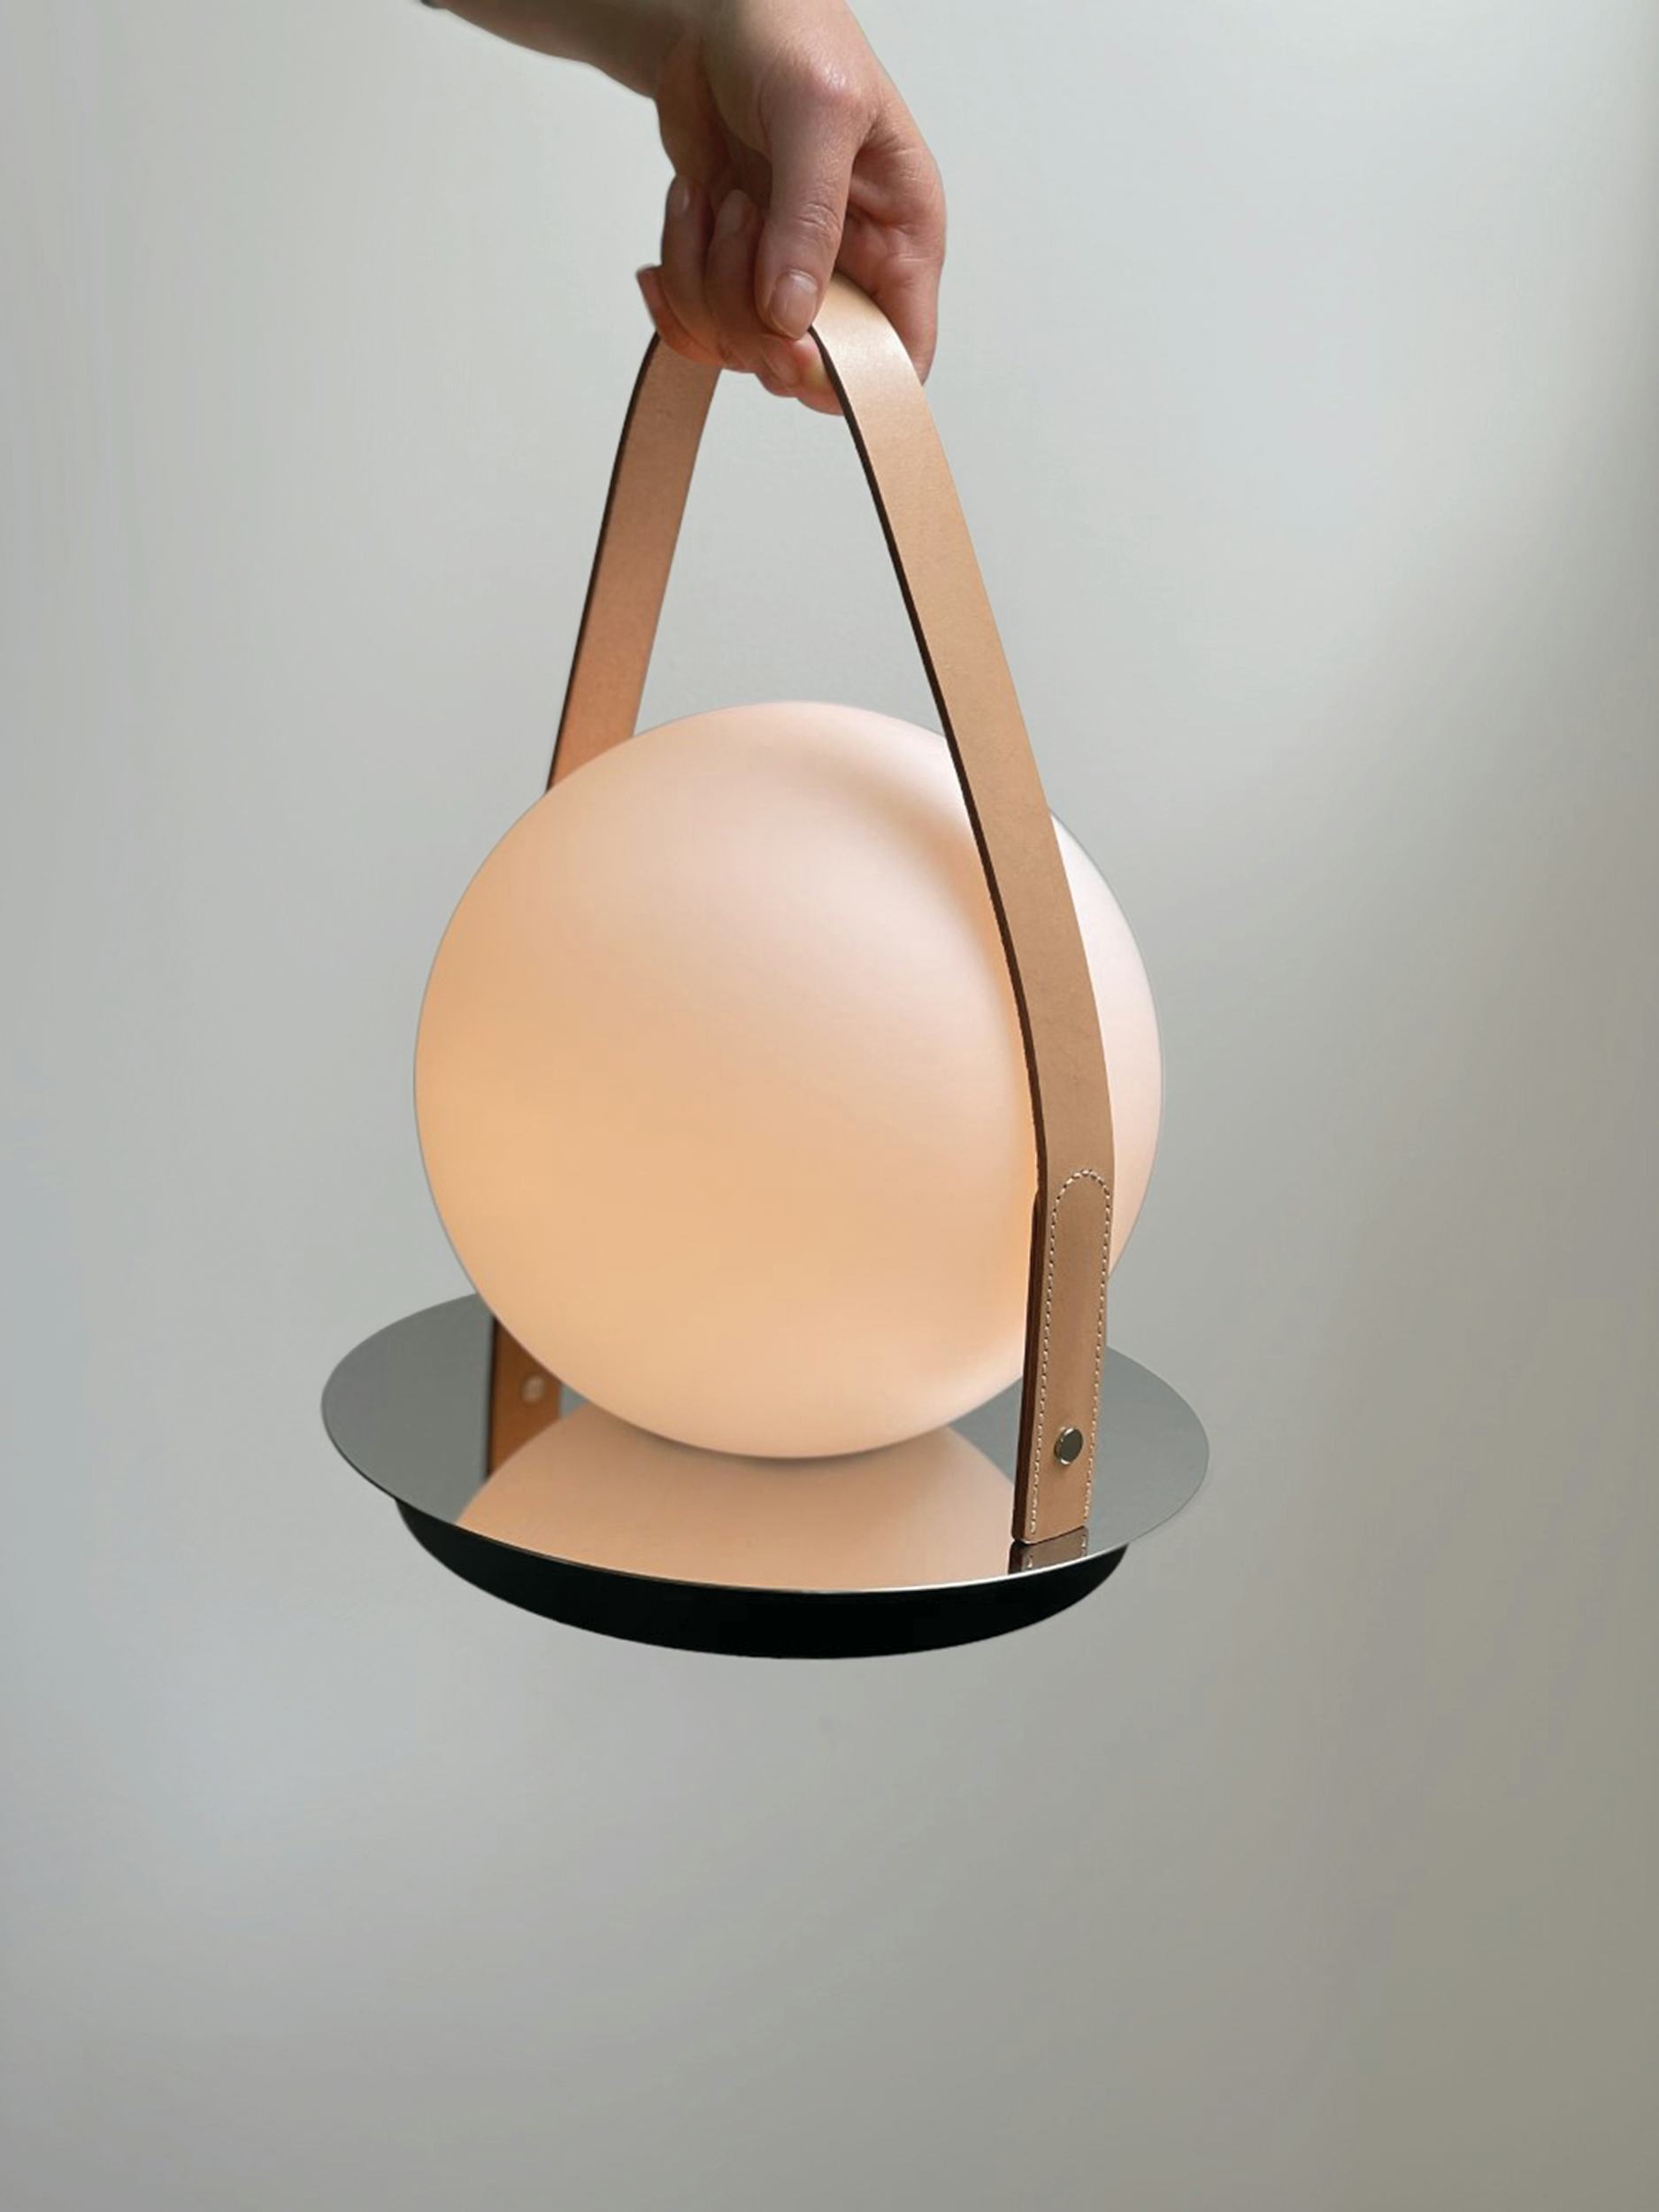 Ball Portable Lamp – Design Within Reach